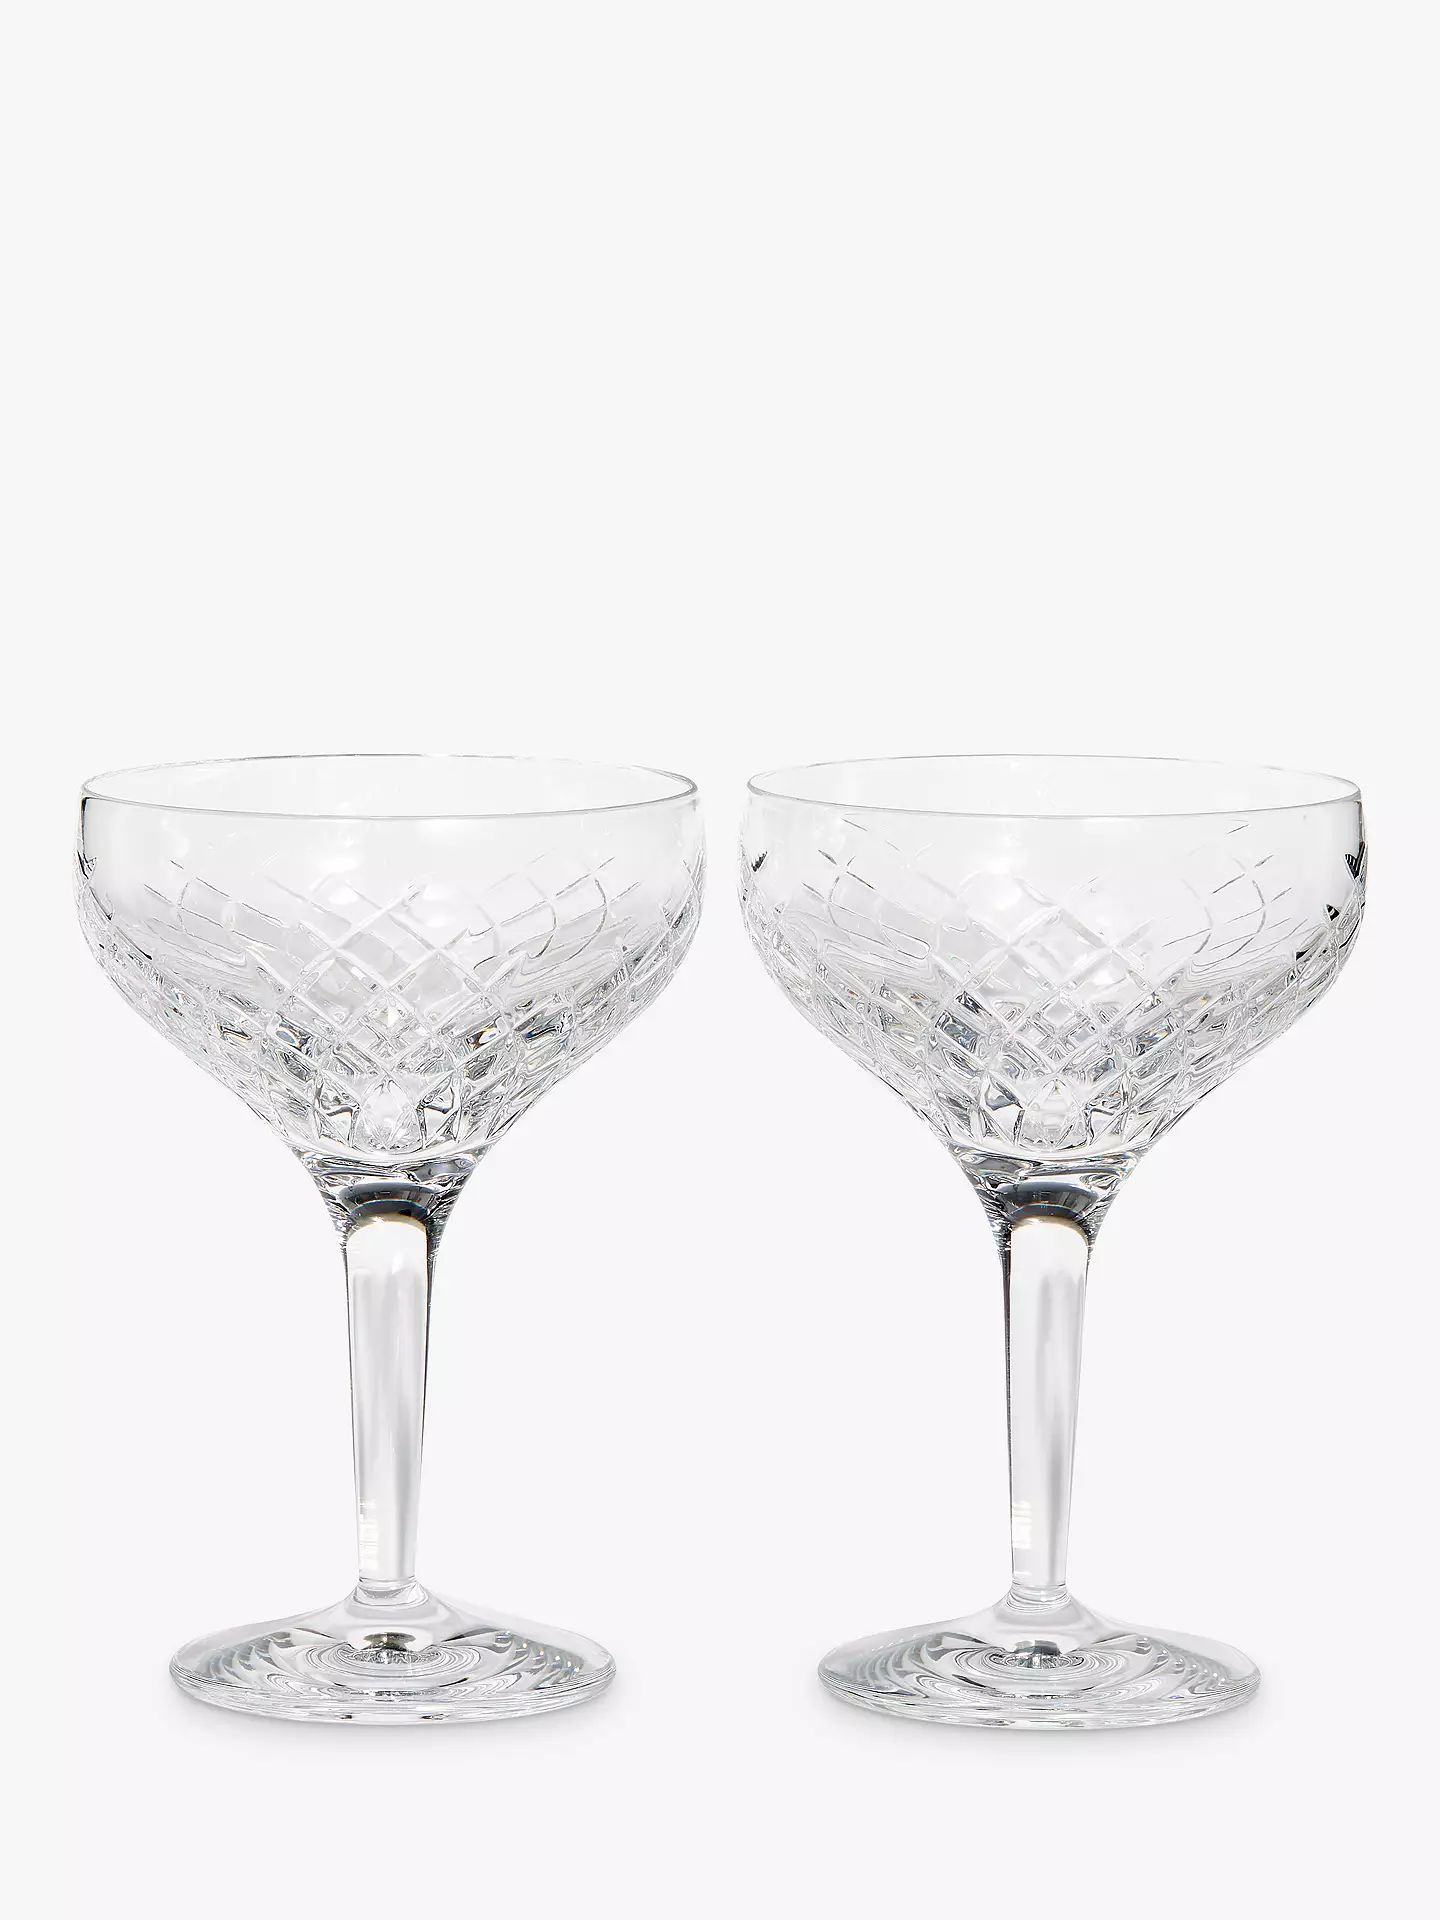 Soho Home Barwell Crystal Cut Champagne Coupe Glasses, 250ml, Set of 2 | John Lewis UK